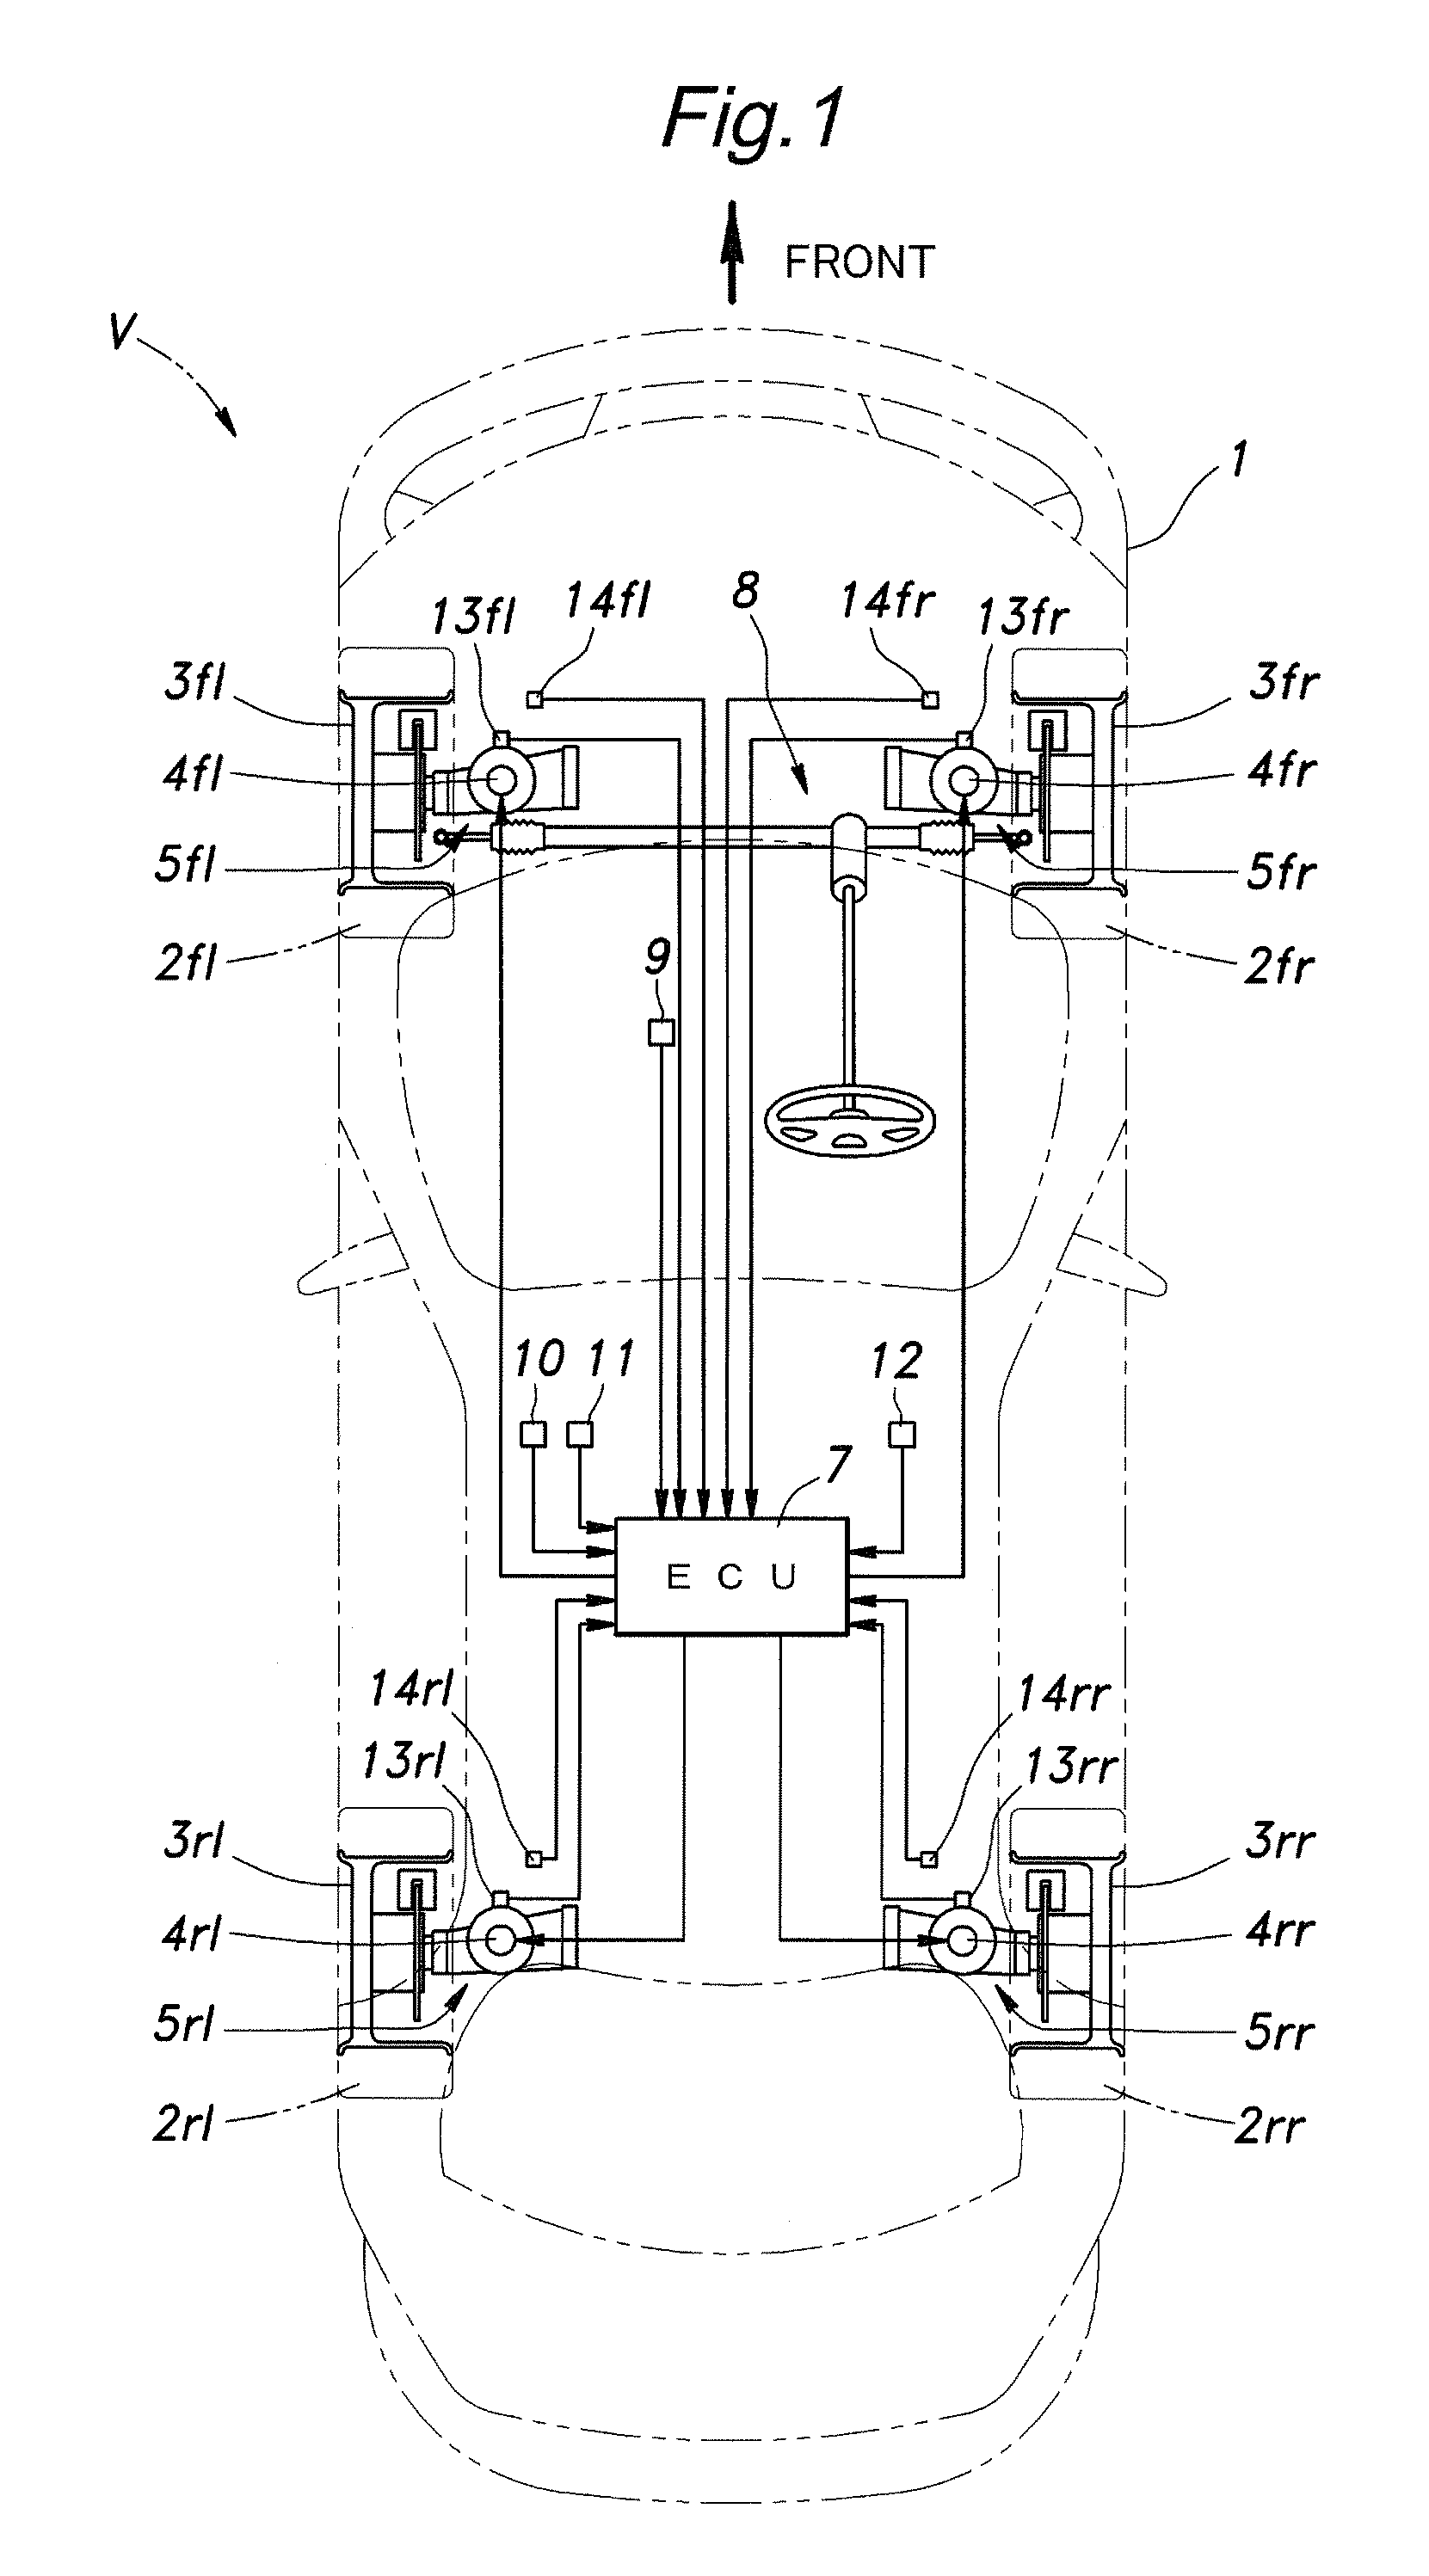 Control apparatus of variable damping force damper